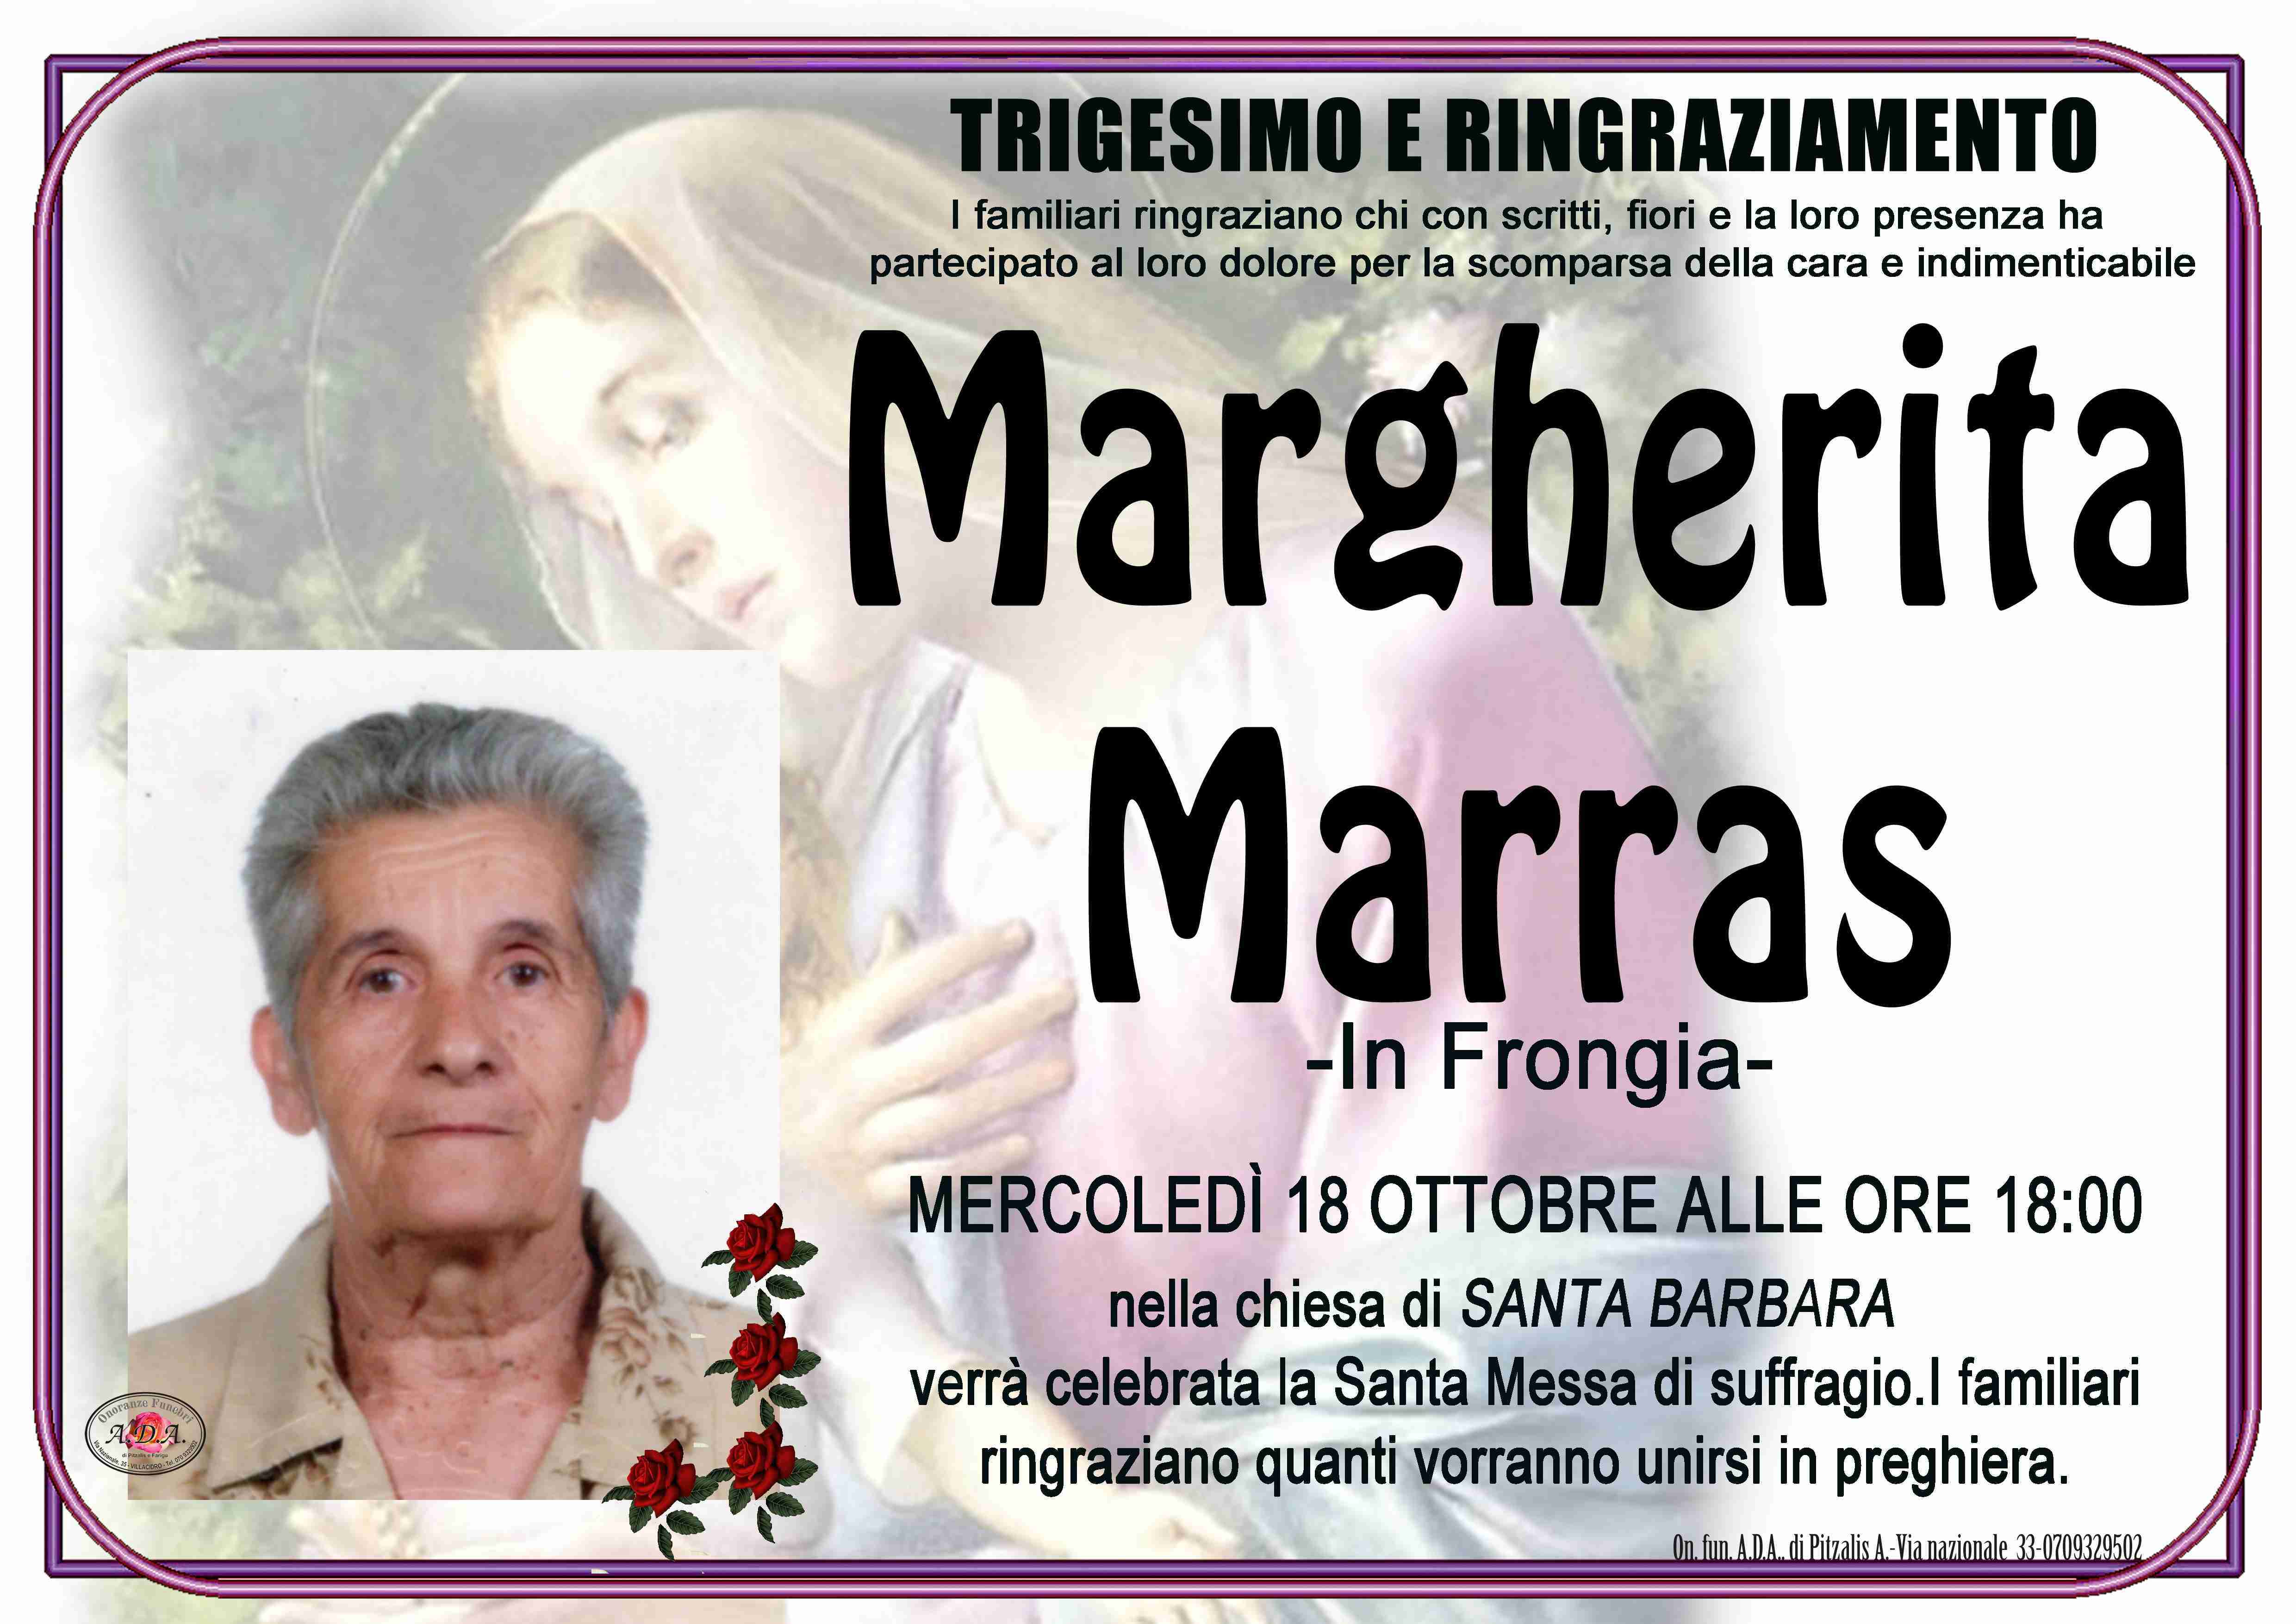 Margherita Marras